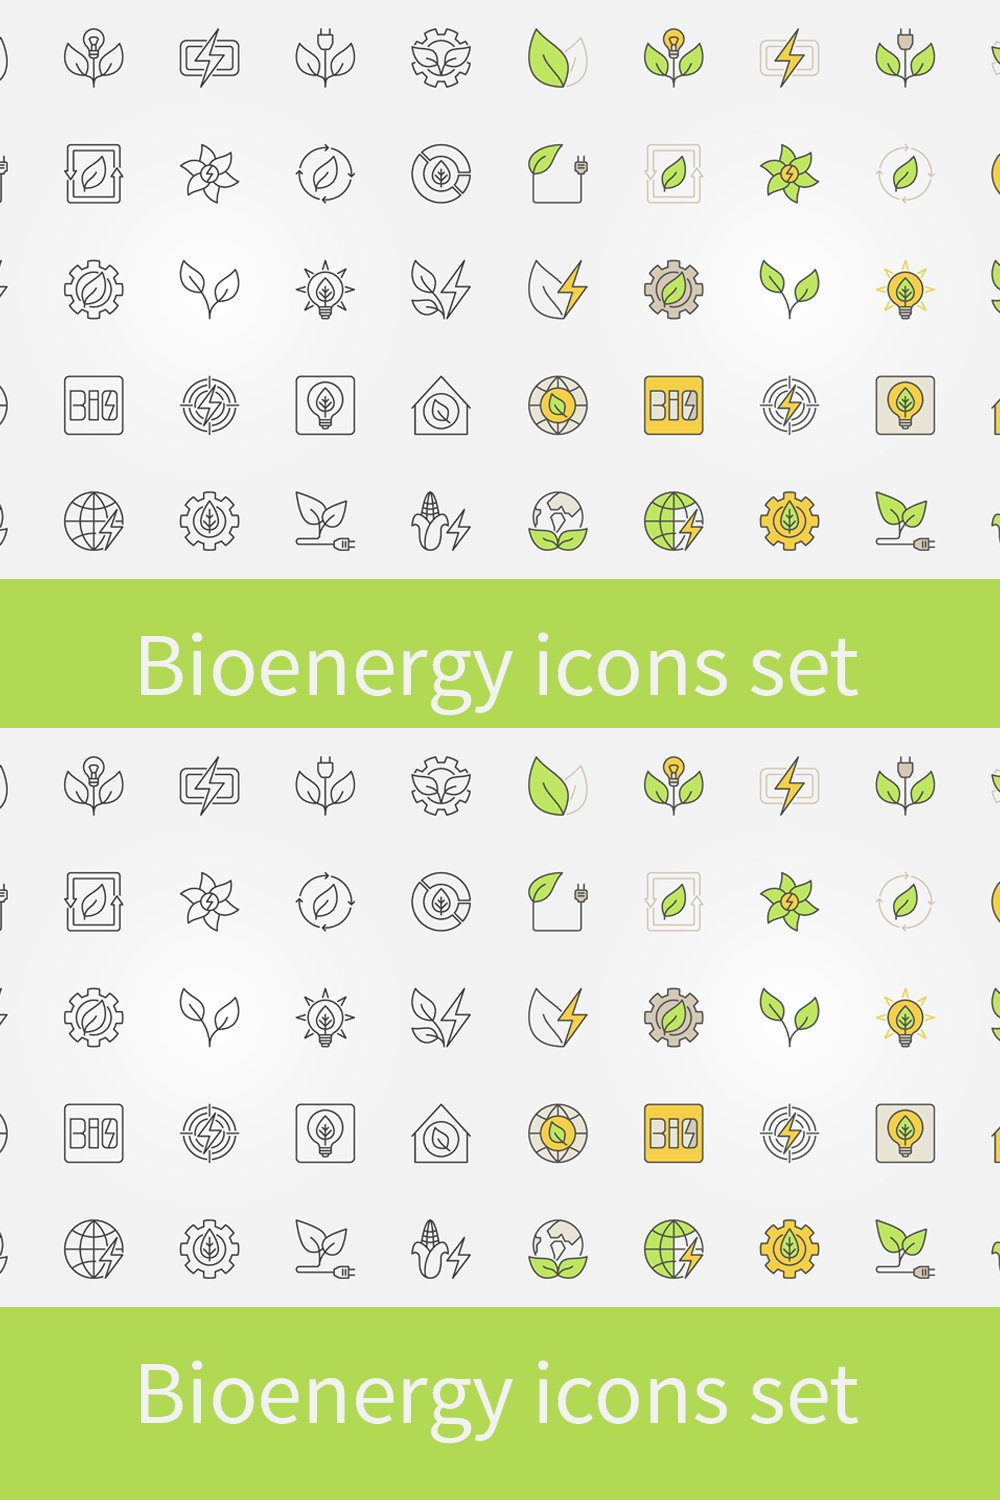 bioenergy icons set pinterest 345